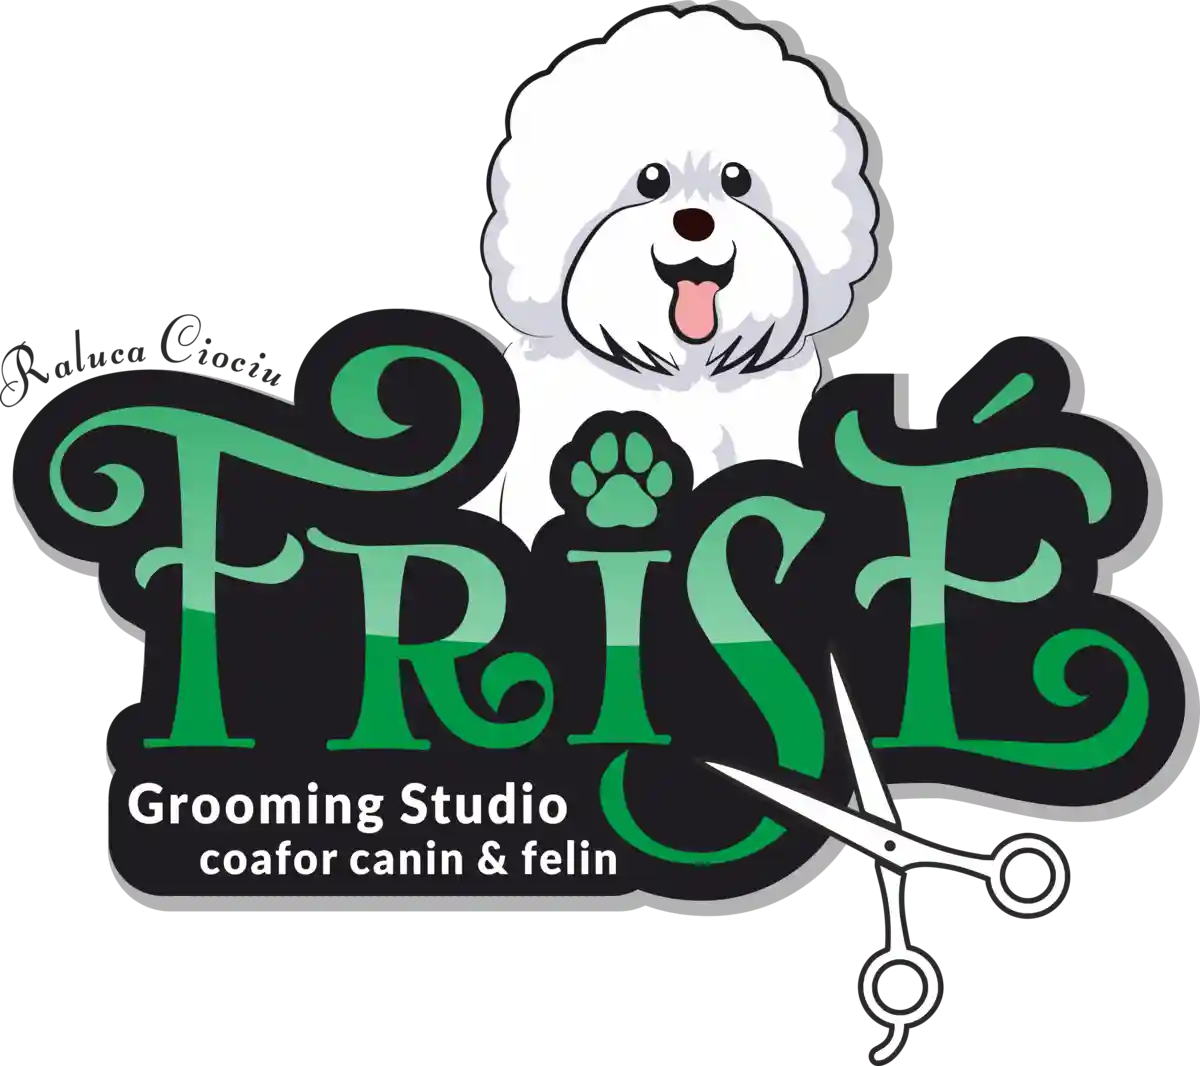 Frise Grooming - Salon Canin & Felin Timișoara|Frise Grooming – Salon Canin și Felin Timișoara